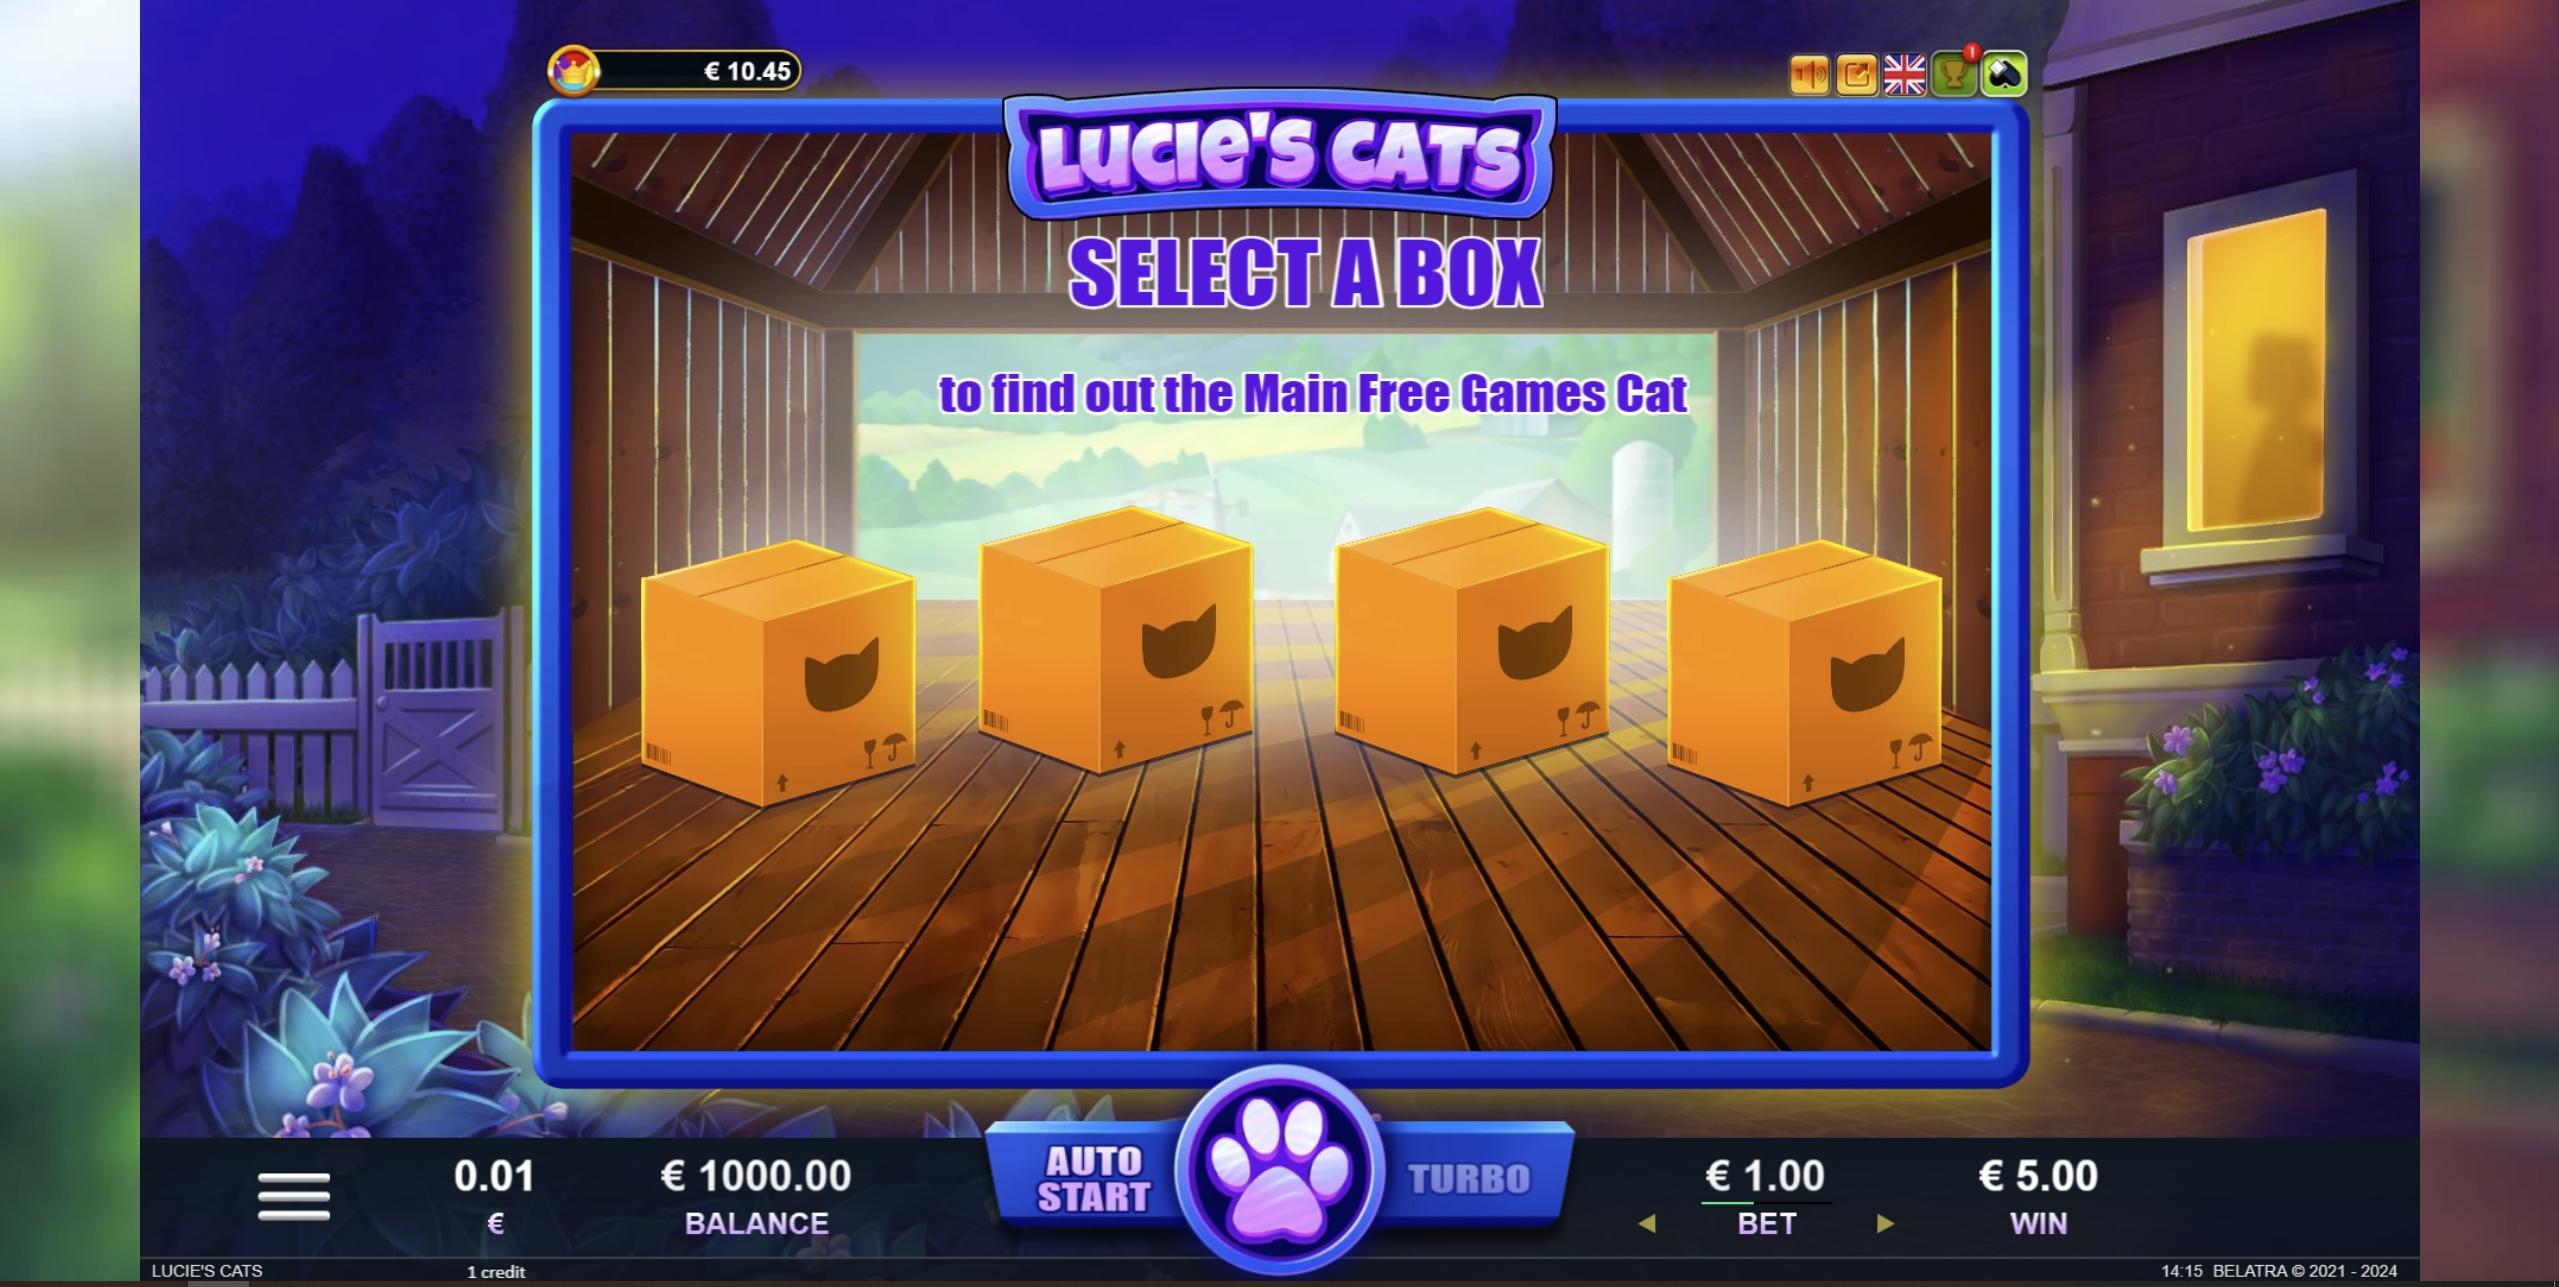 Lucie's Cats | Промо-материалы | Игровой автомат онлайн